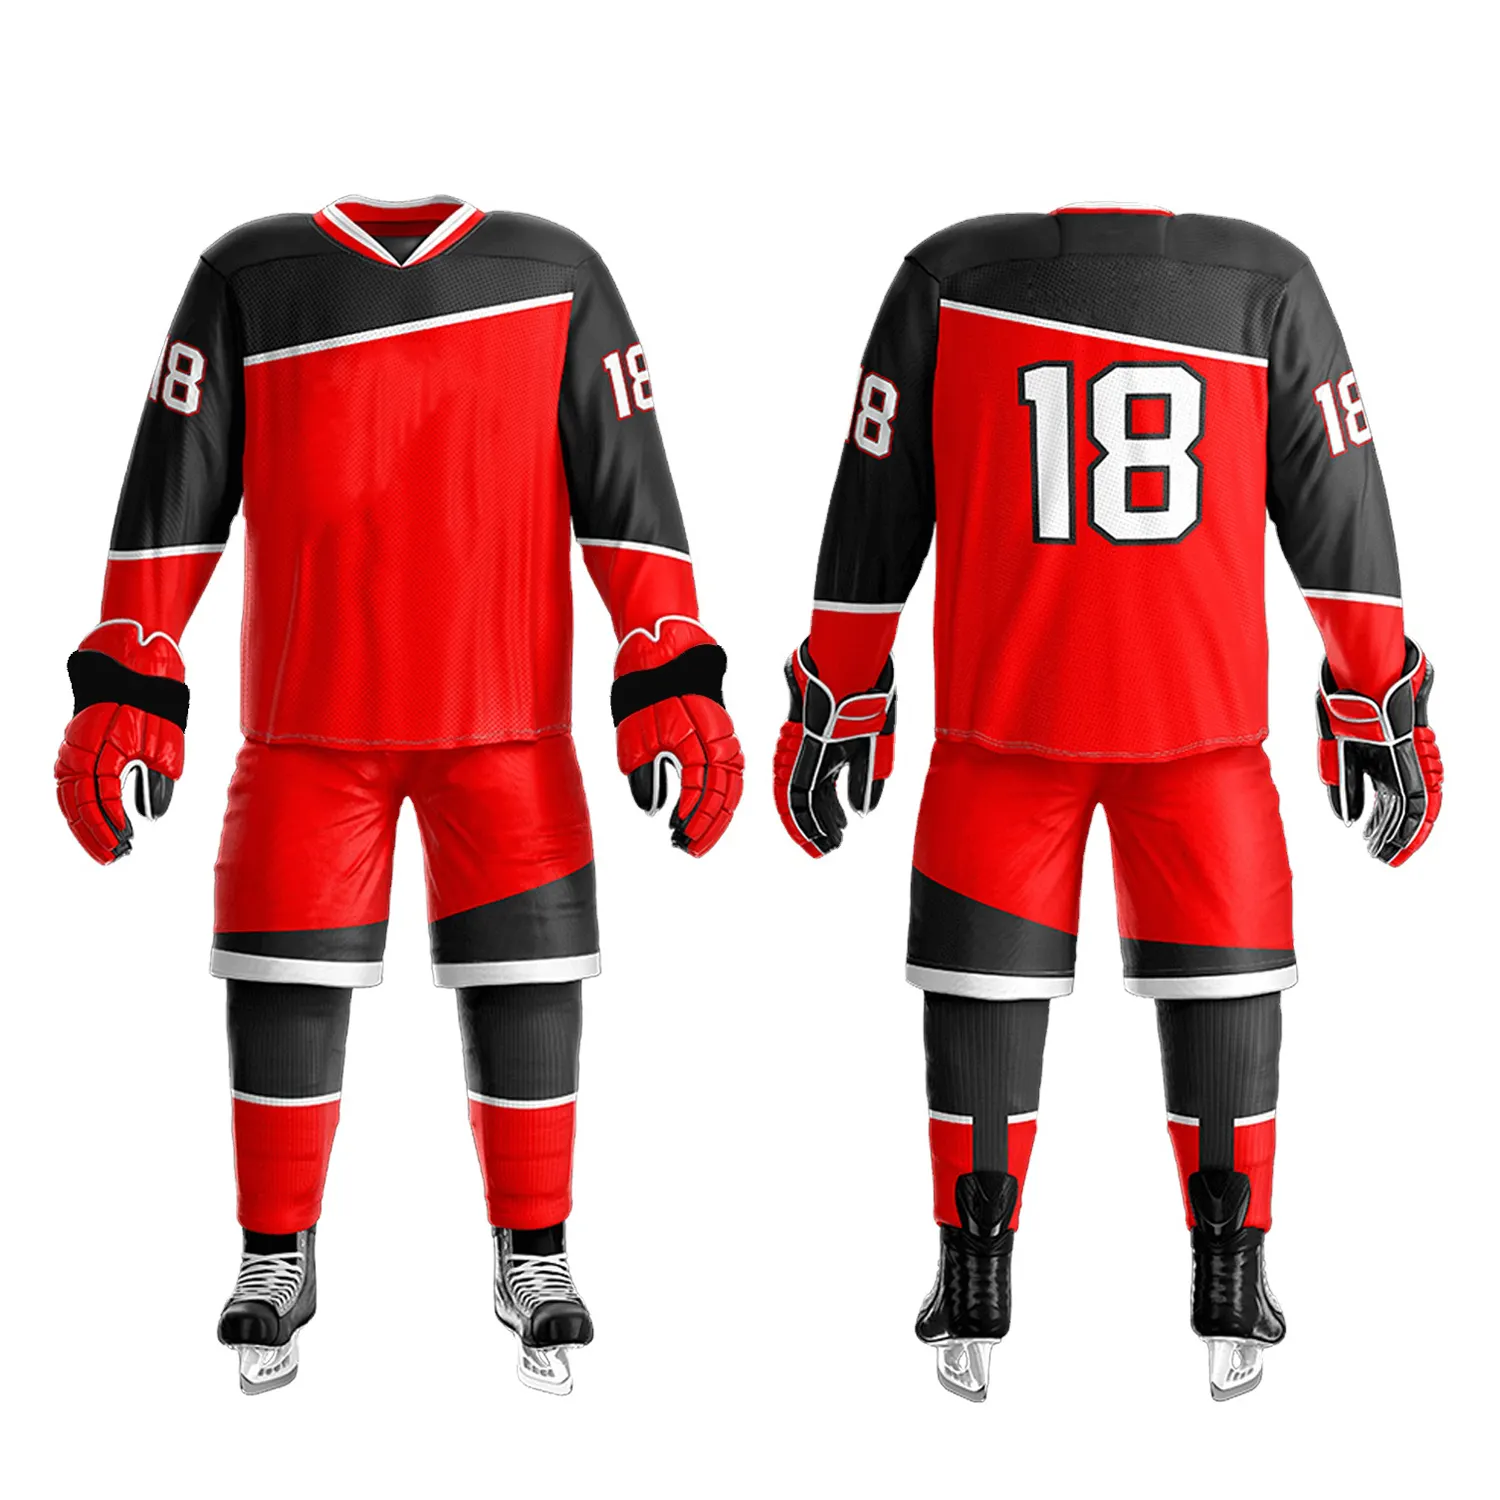 Premium Quality Sublimated Cheap Price Ice Hockey Uniform Set Hot Sale Best Supplier Ice Hockey Uniform